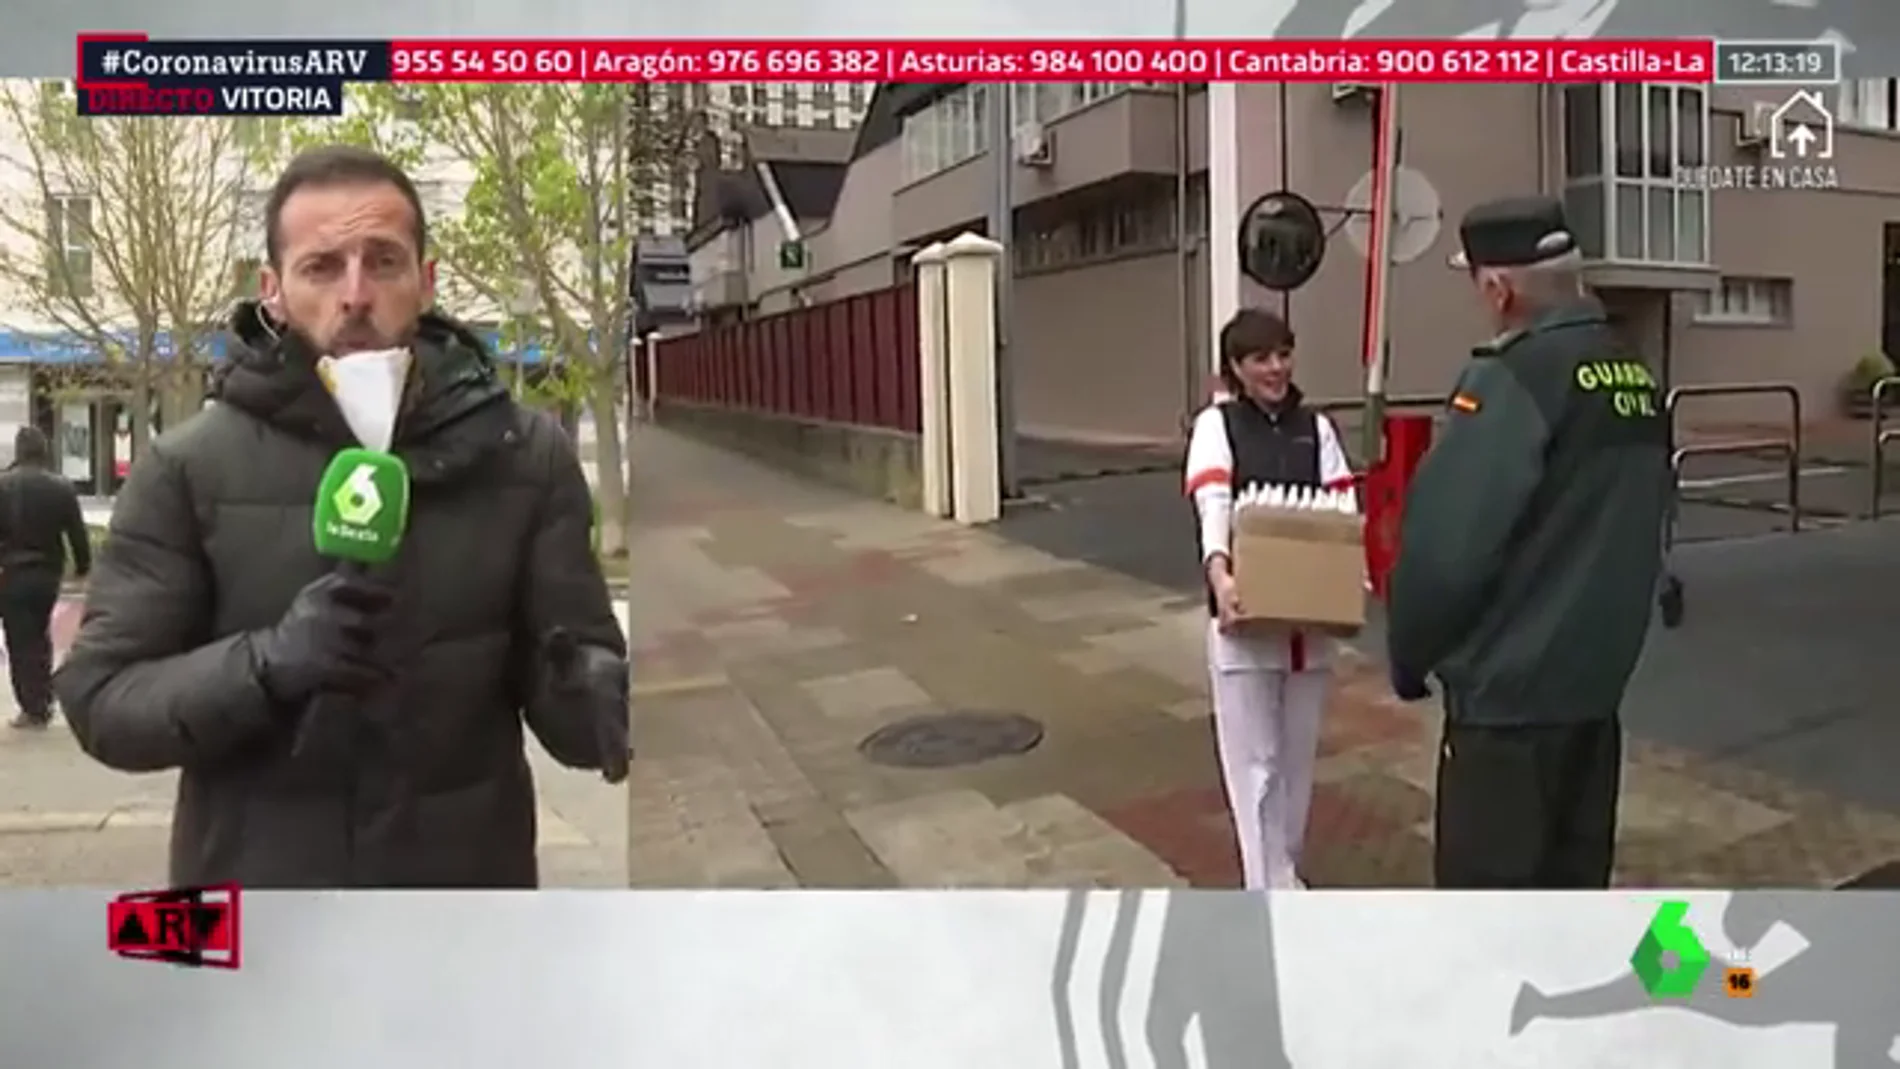 Los comercios de Sansomendi (Vitoria) donan mascarillas y geles a la Guardia Civil